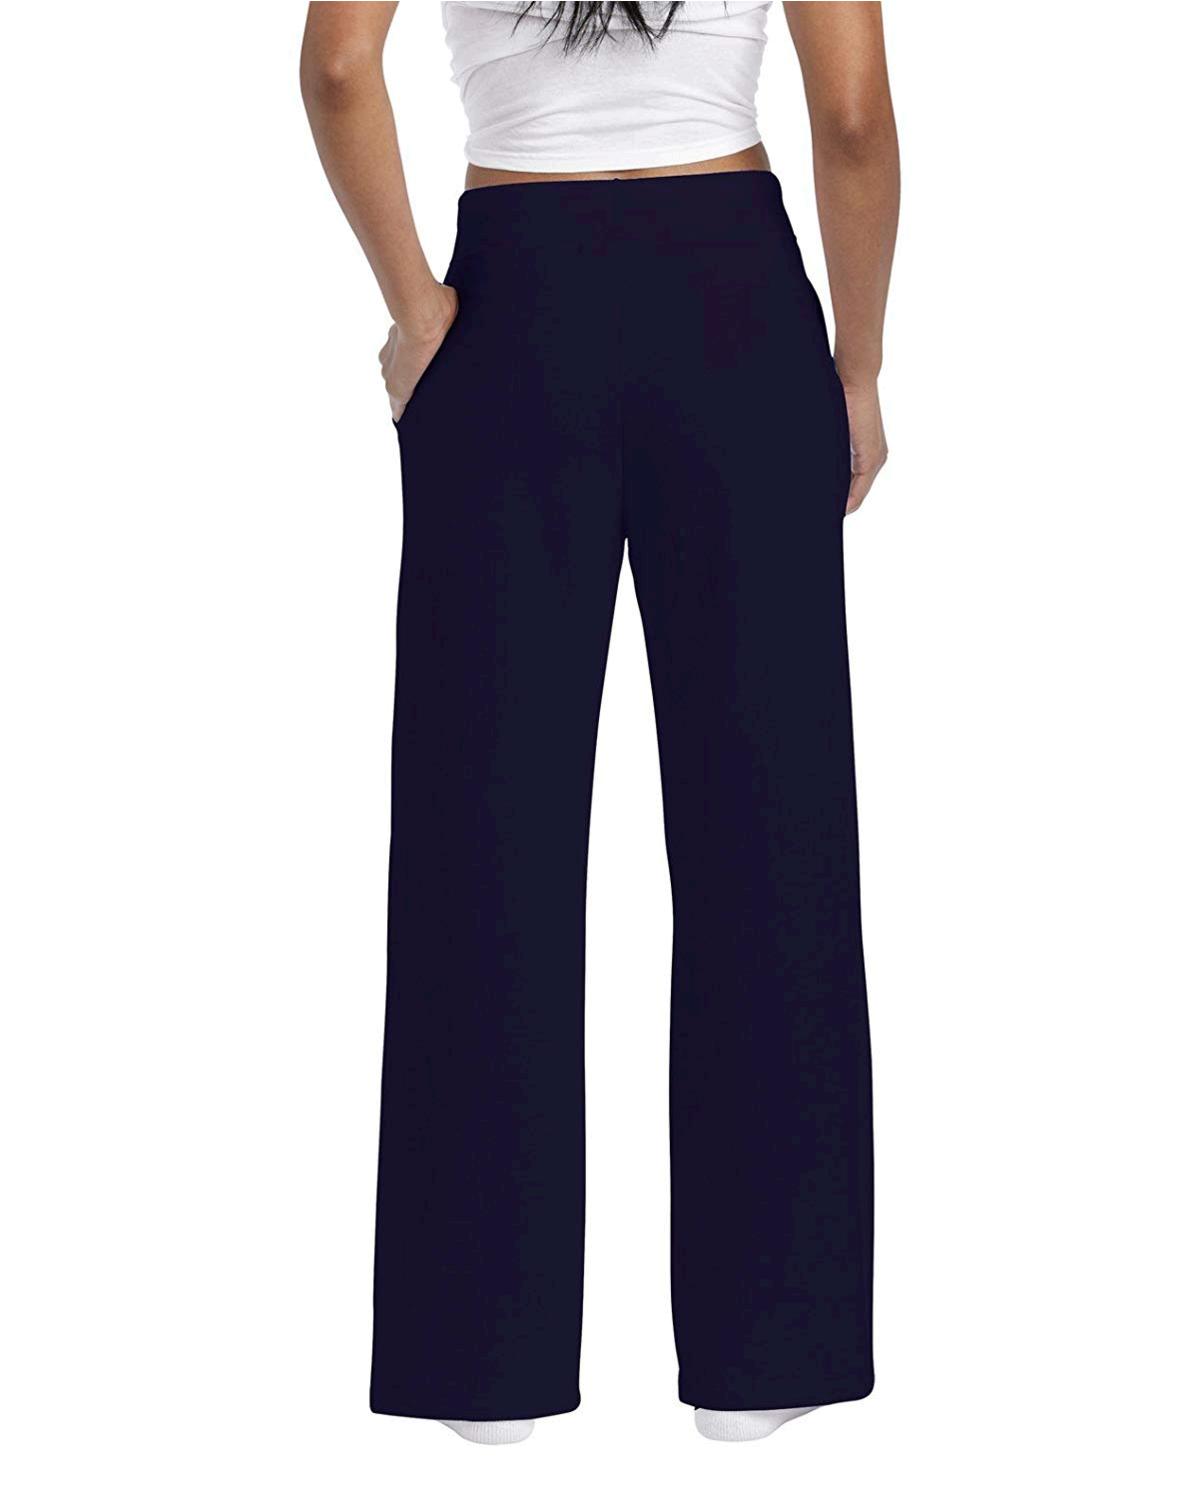 Gildan Women's Open Bottom Sweatpants, Navy, 2X-Large, Navy, Size XX ...